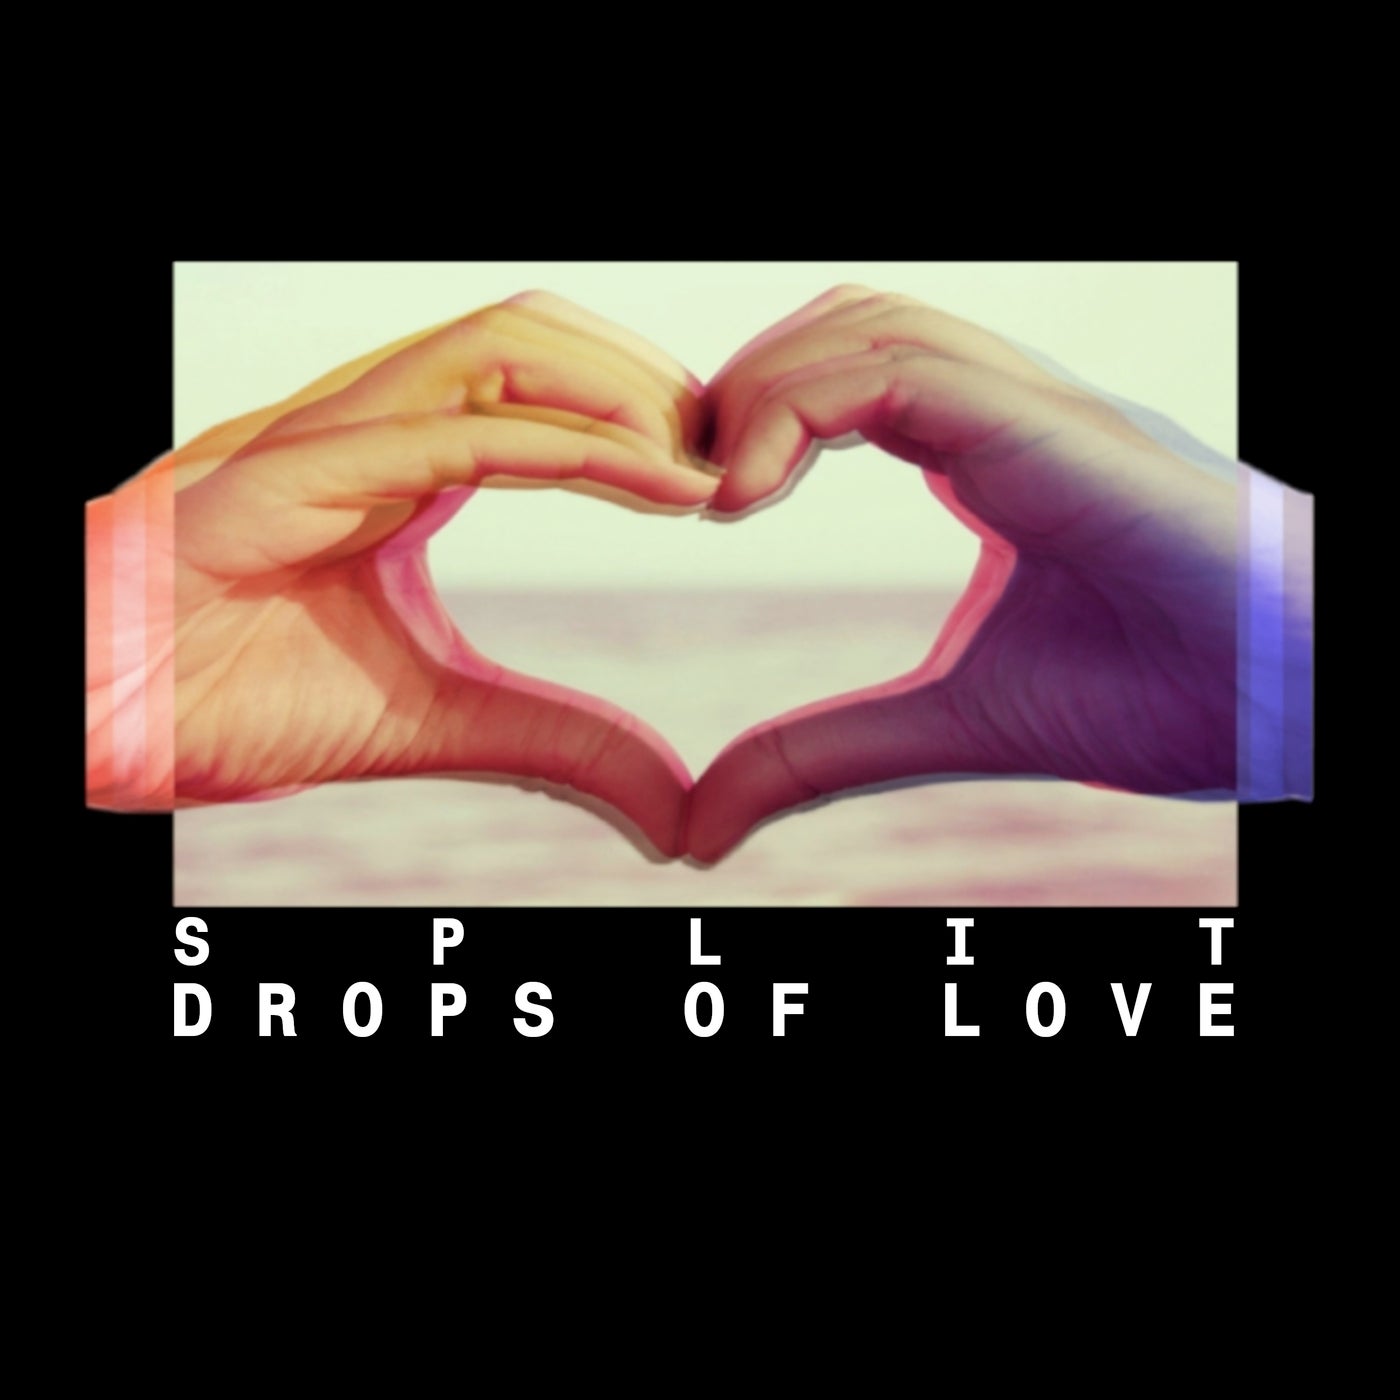 Drops of Love